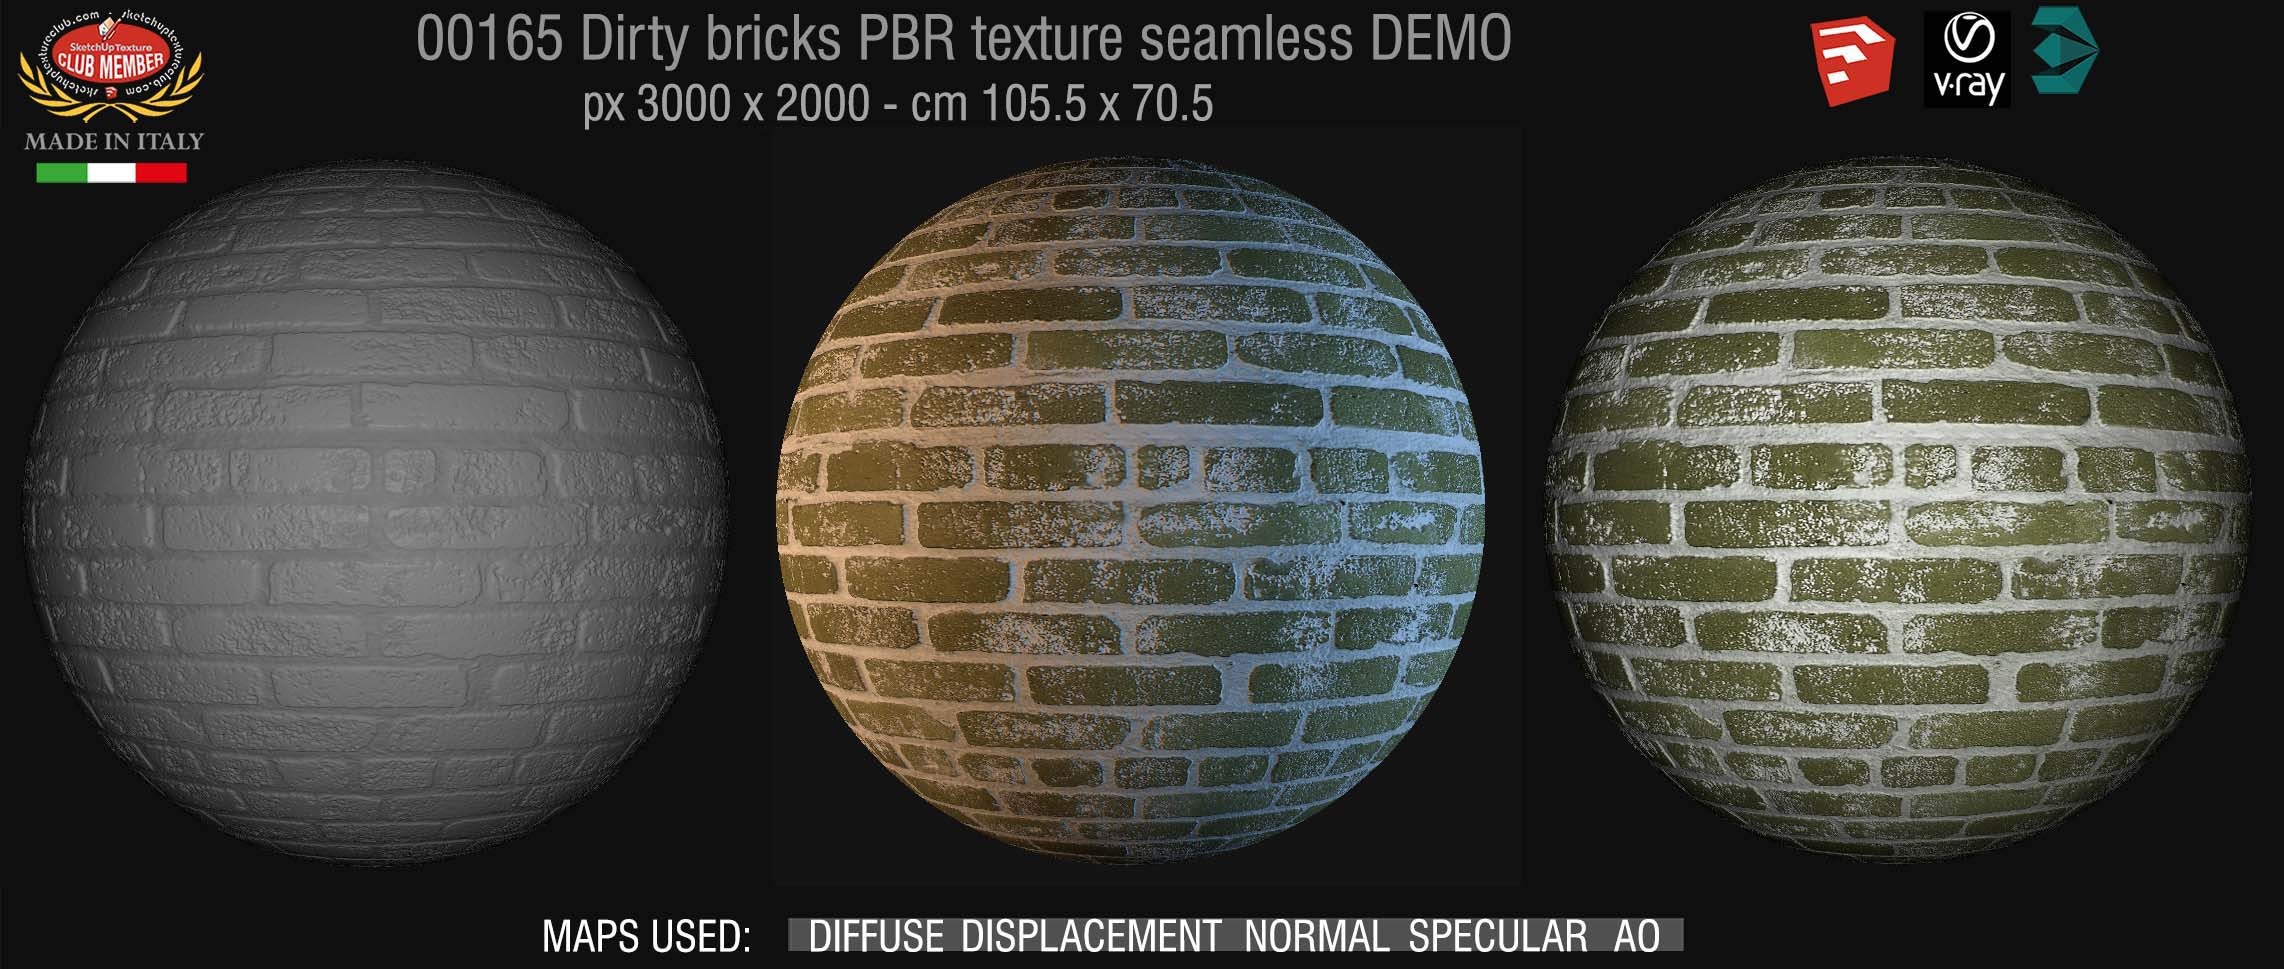 00165 Dirty bricks PBR texture seamless DEMO